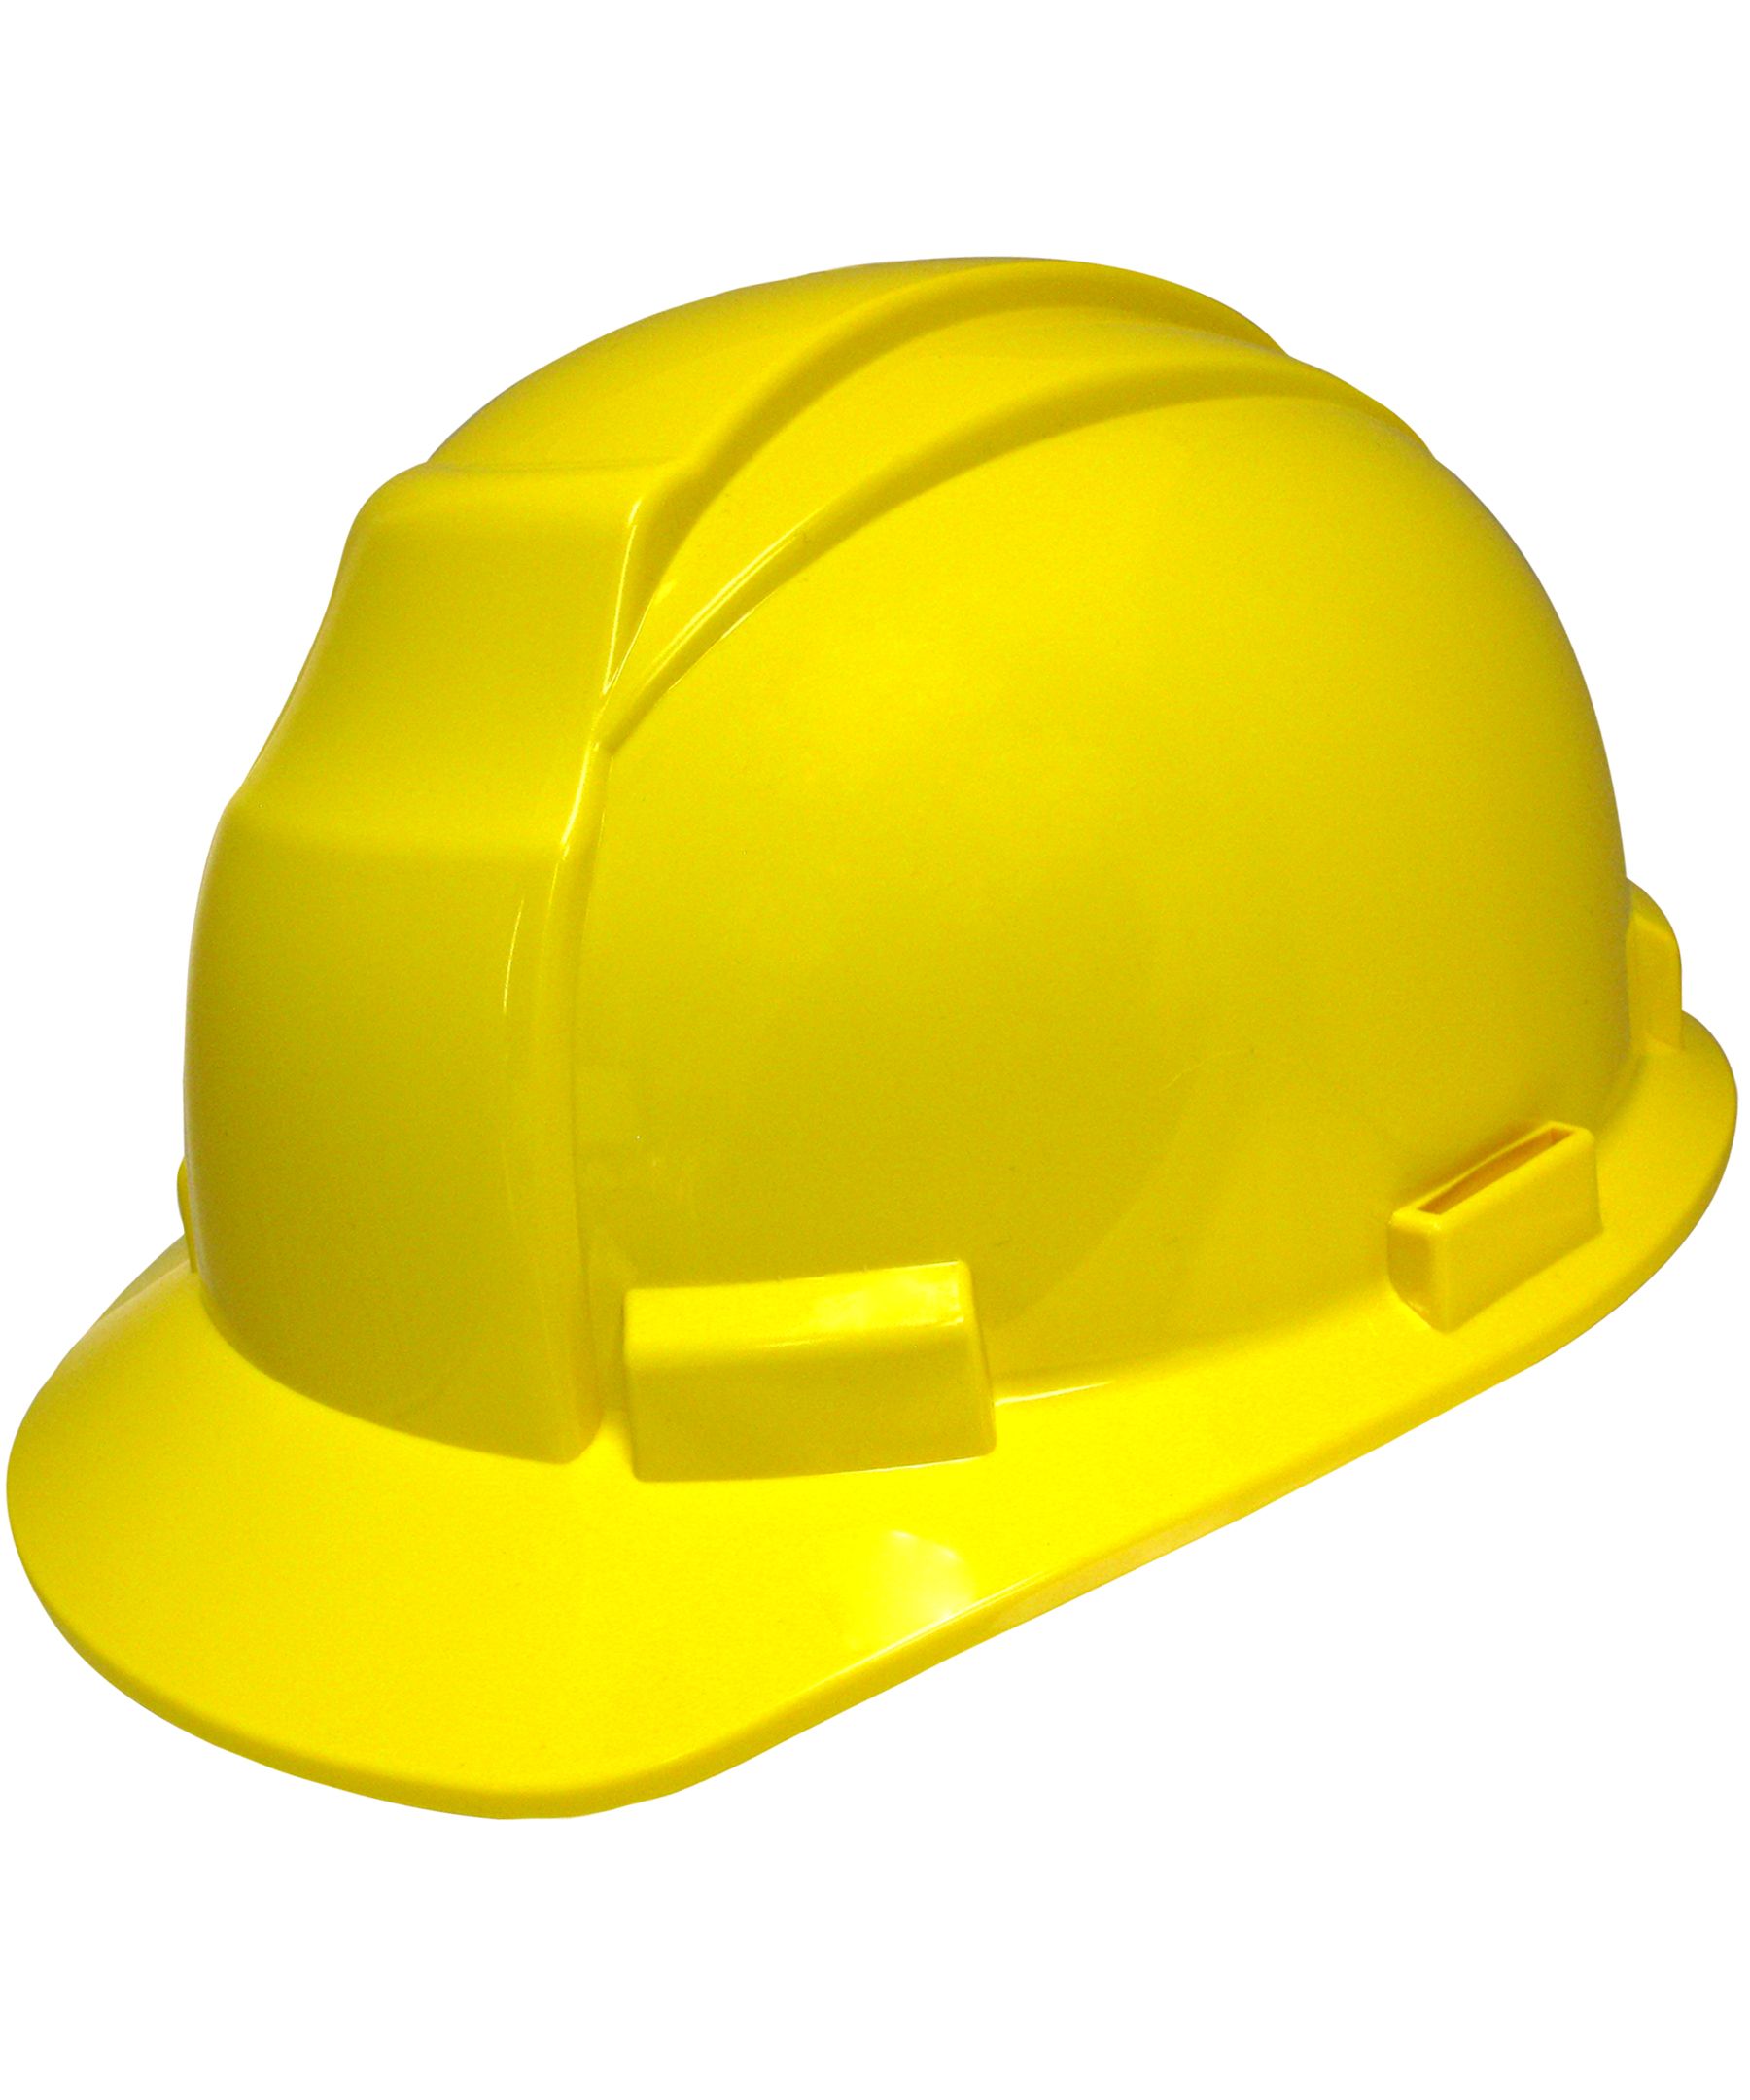 Casque de protection jaune - Casque jaune chantier basic EPI